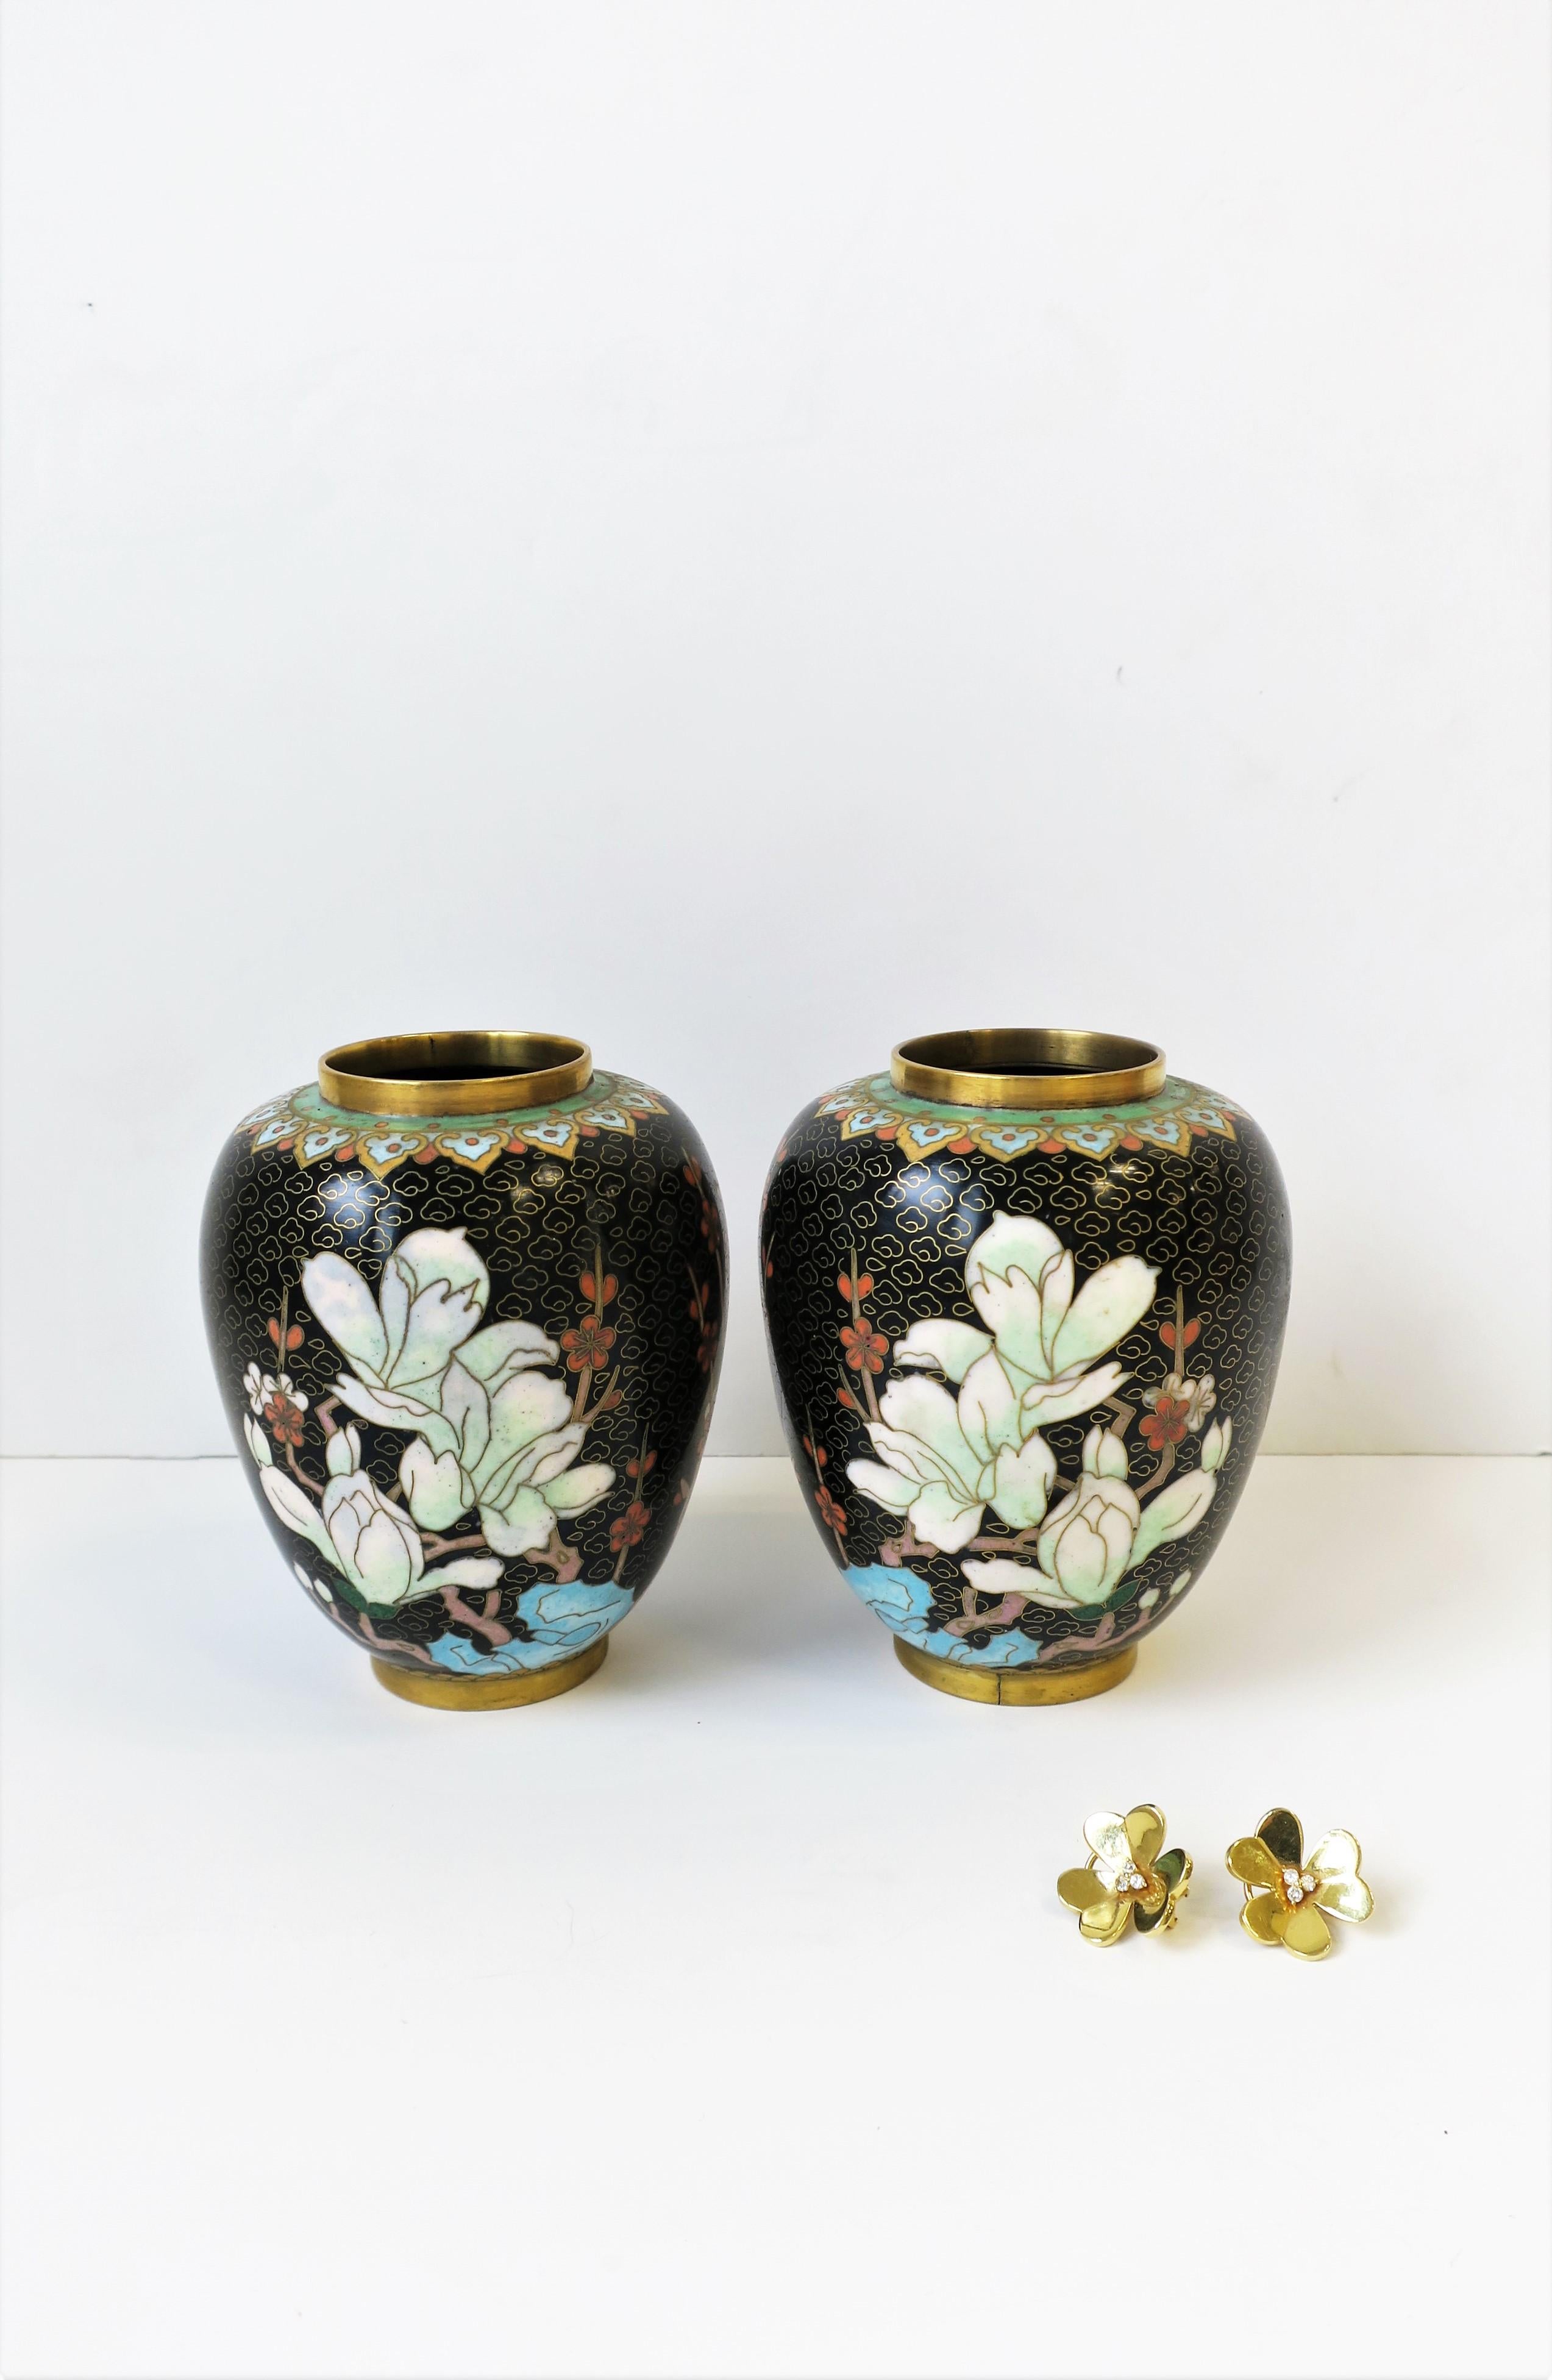 Enameled Cloisonné́ Enamel and Brass Flower Vases Black Gold and Pastel Colors, Pair For Sale